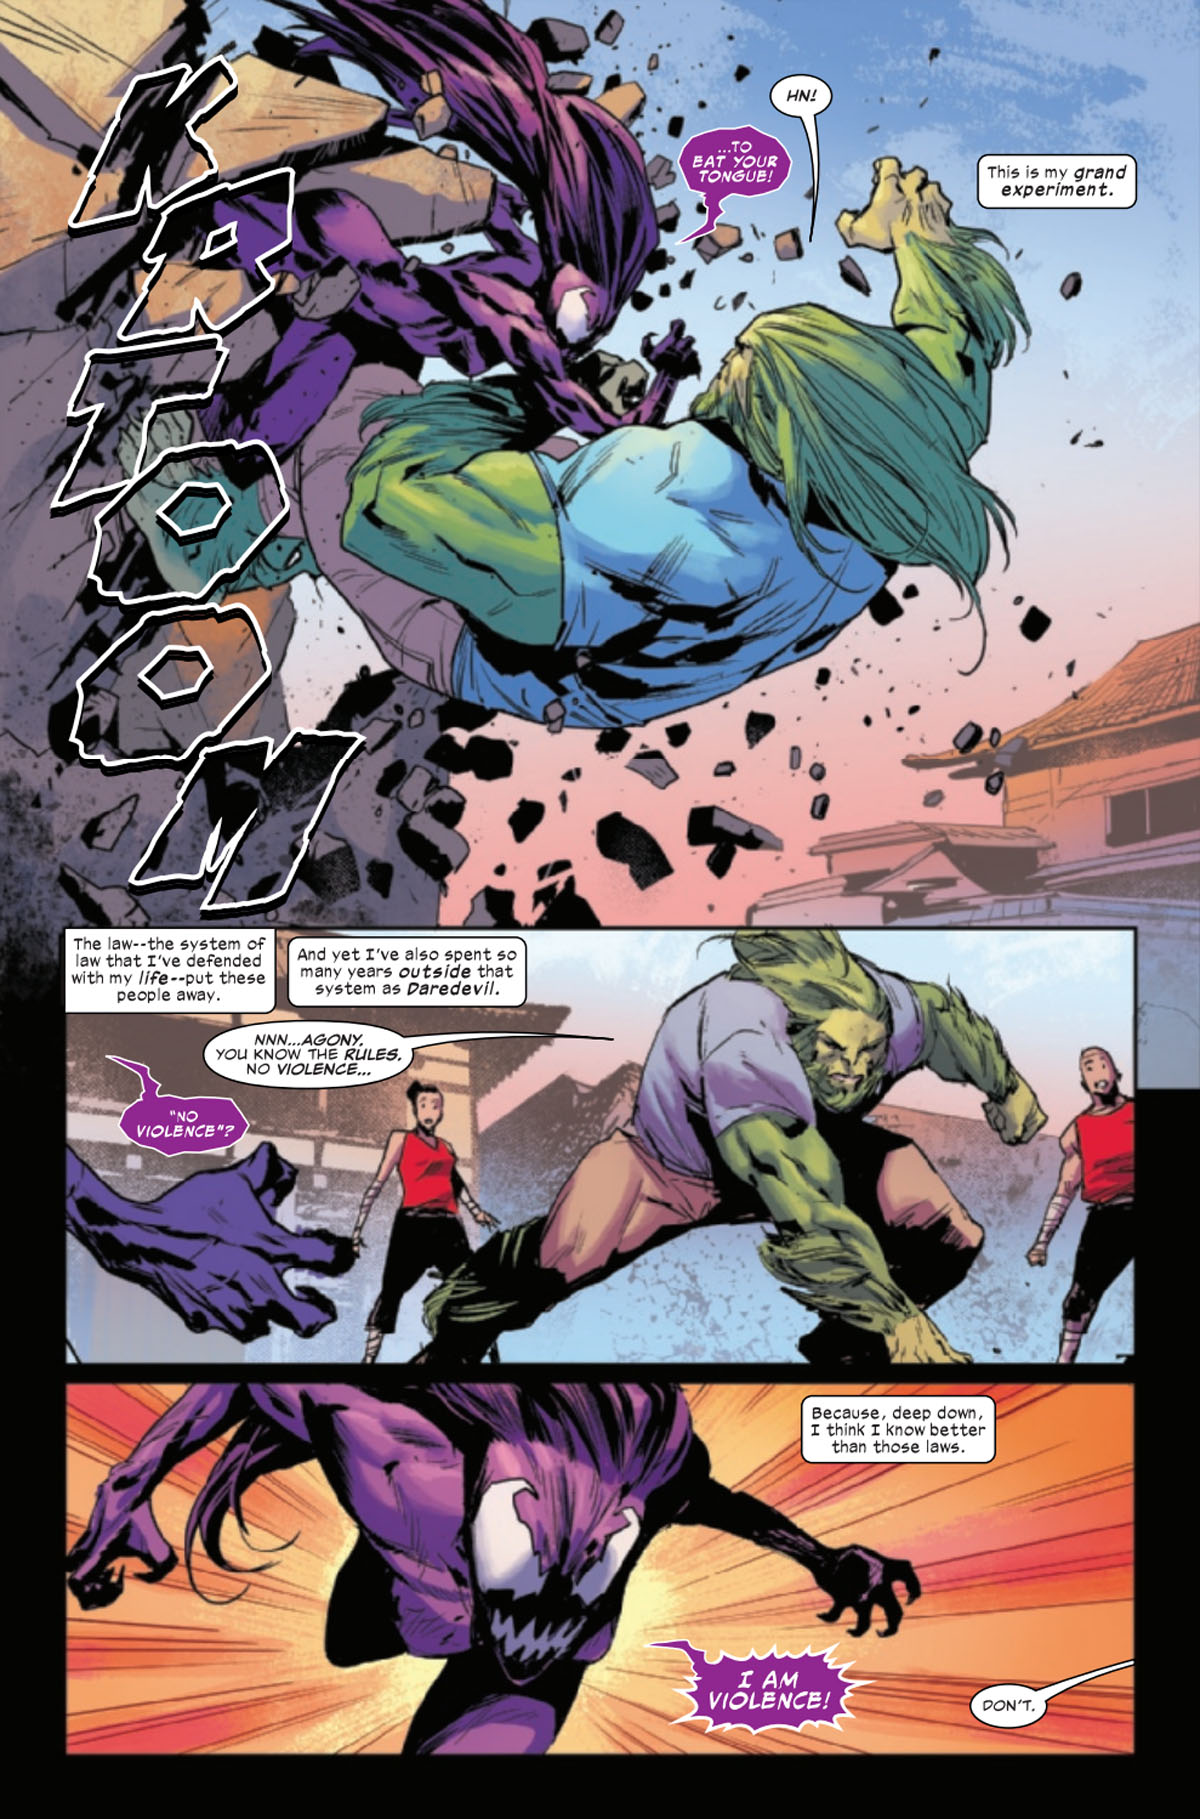 Daredevil #6 page 2